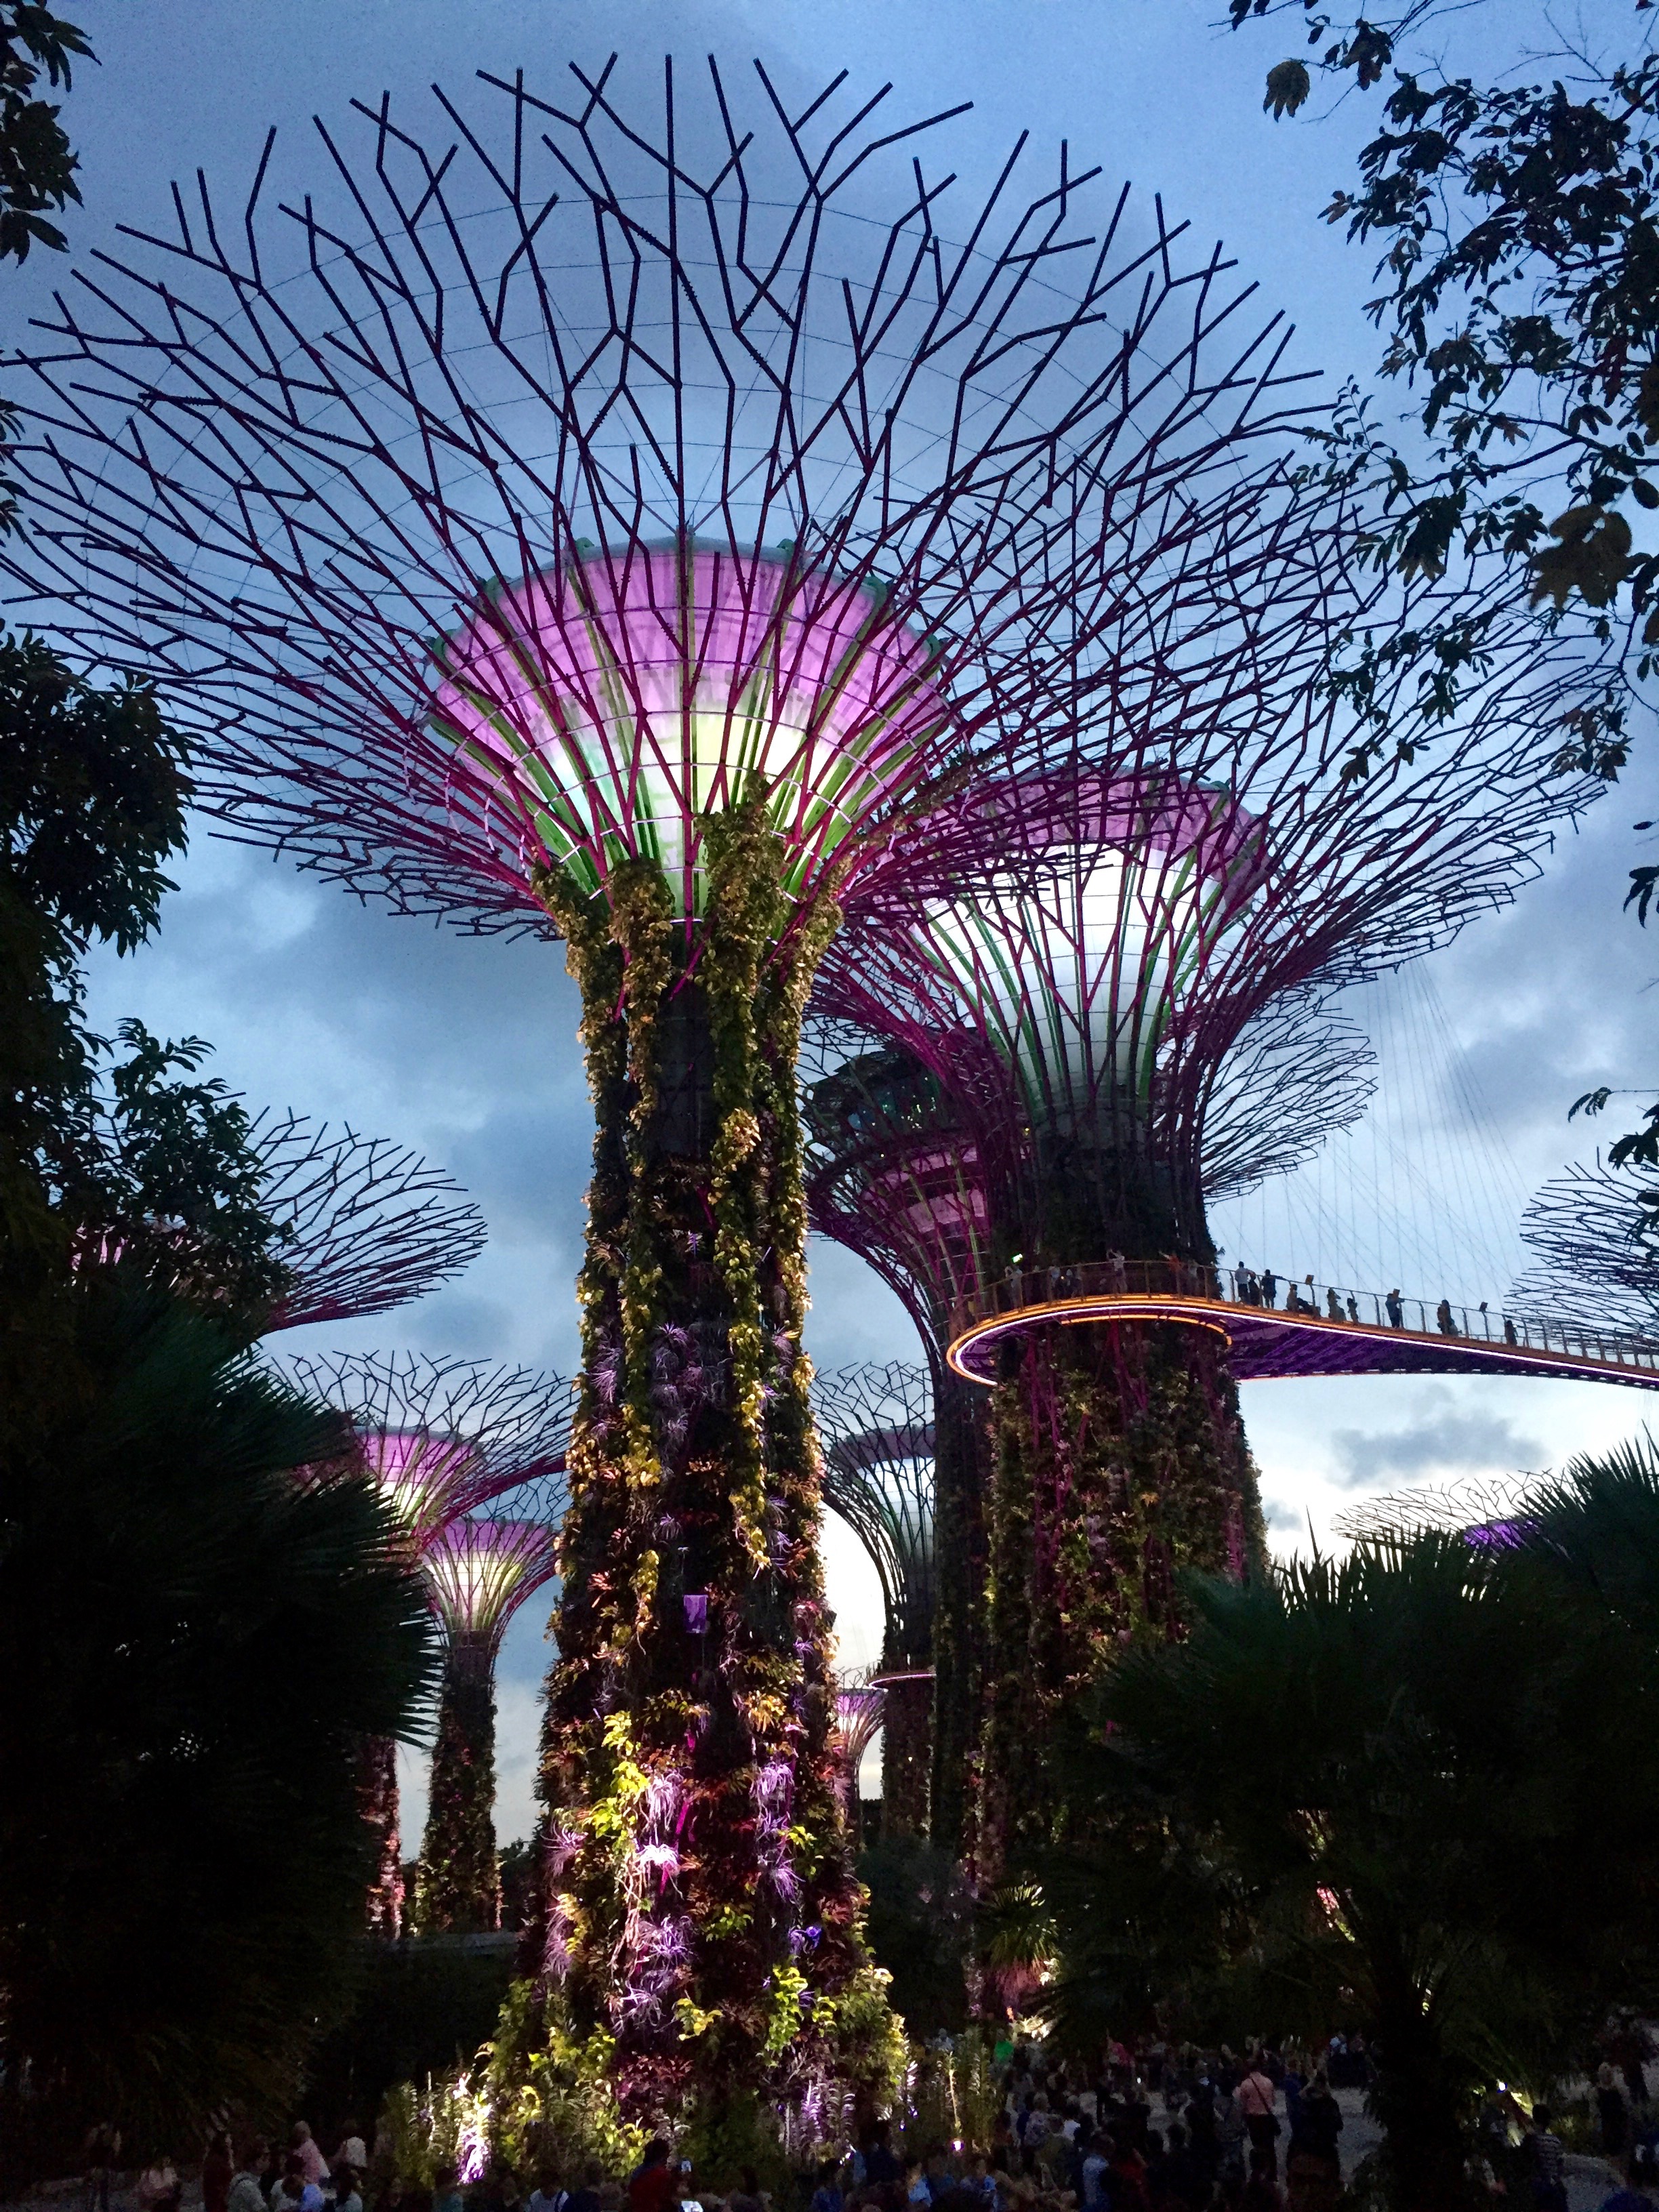 Singapore's supertrees